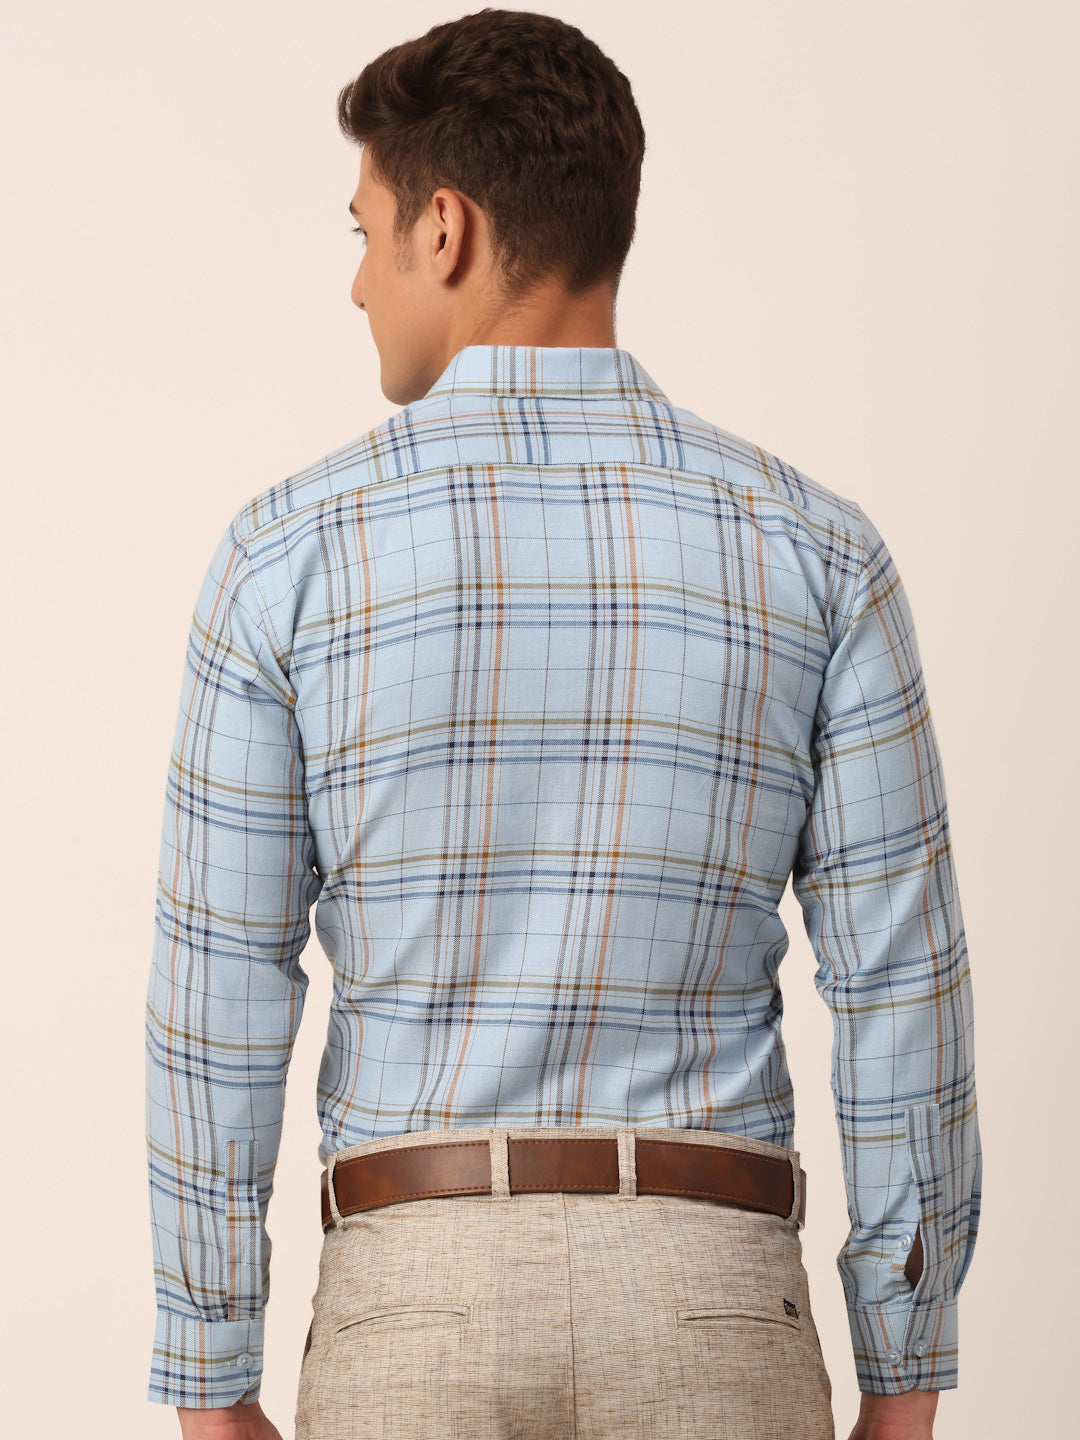 Men's Cotton Checked Formal Shirts ( SF 819Sky ) - Jainish